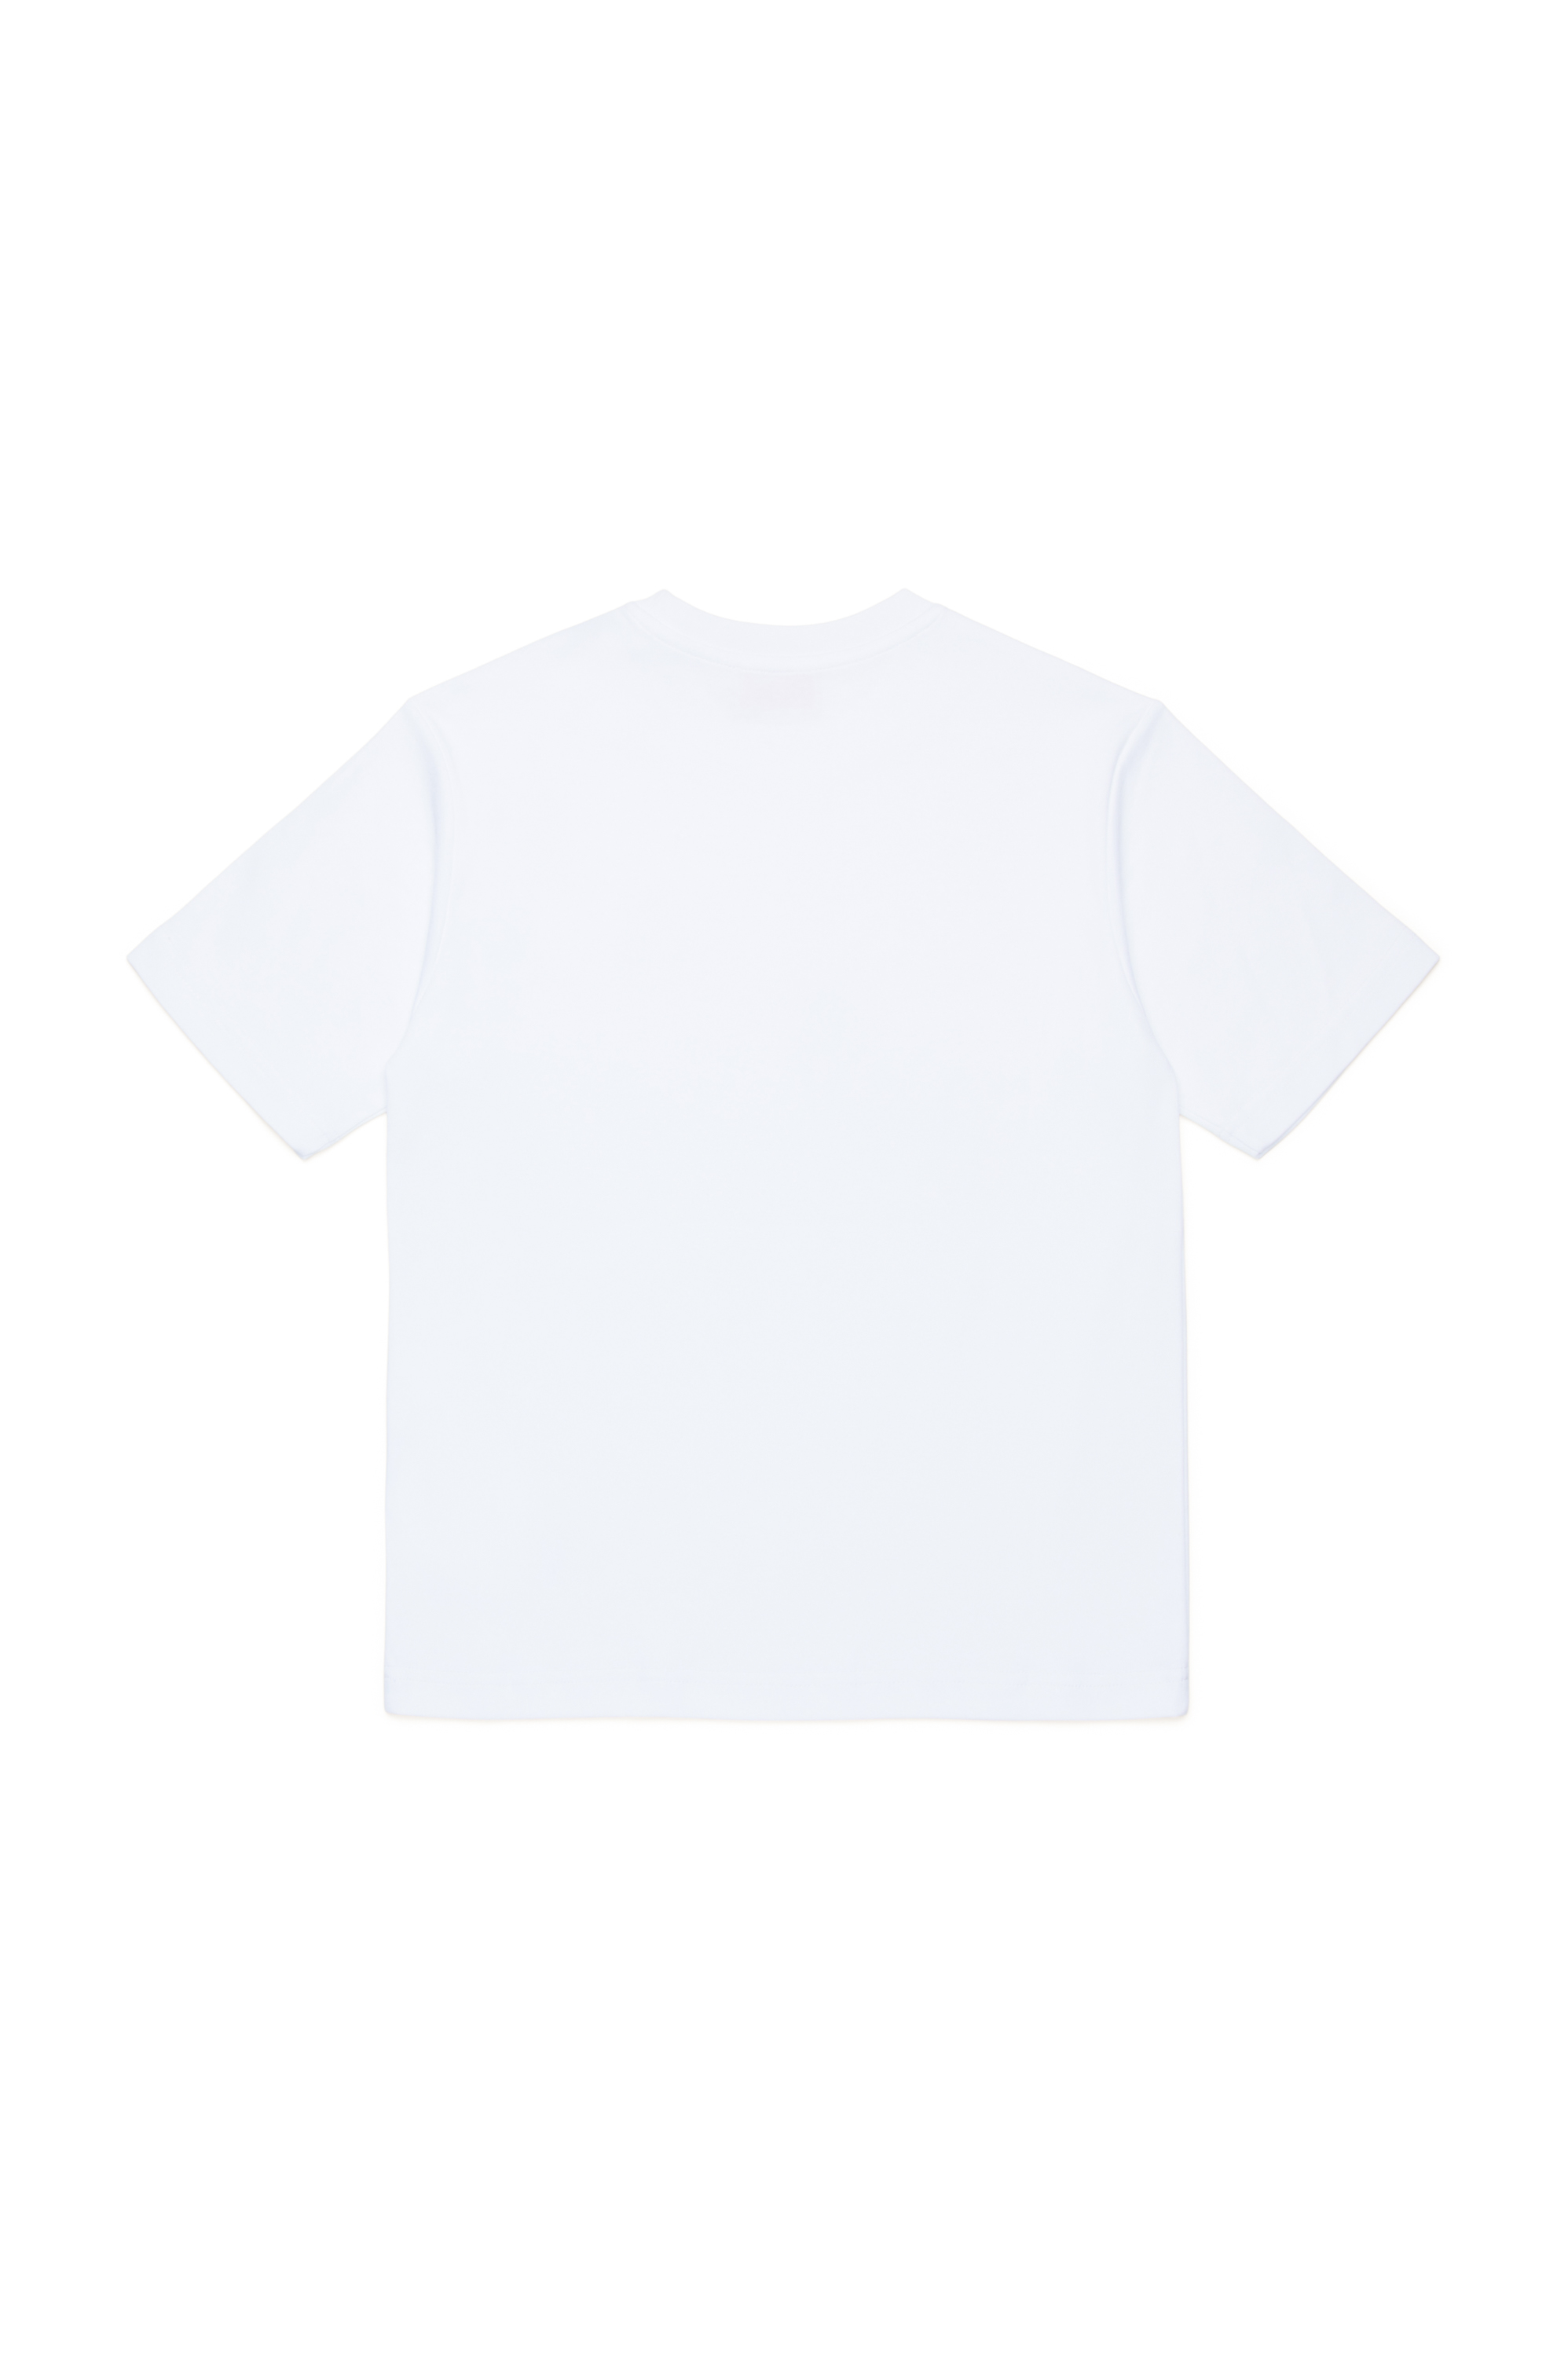 Diesel - TDIEGORK65, Male T-shirt with Diesel prints in ホワイト - Image 2